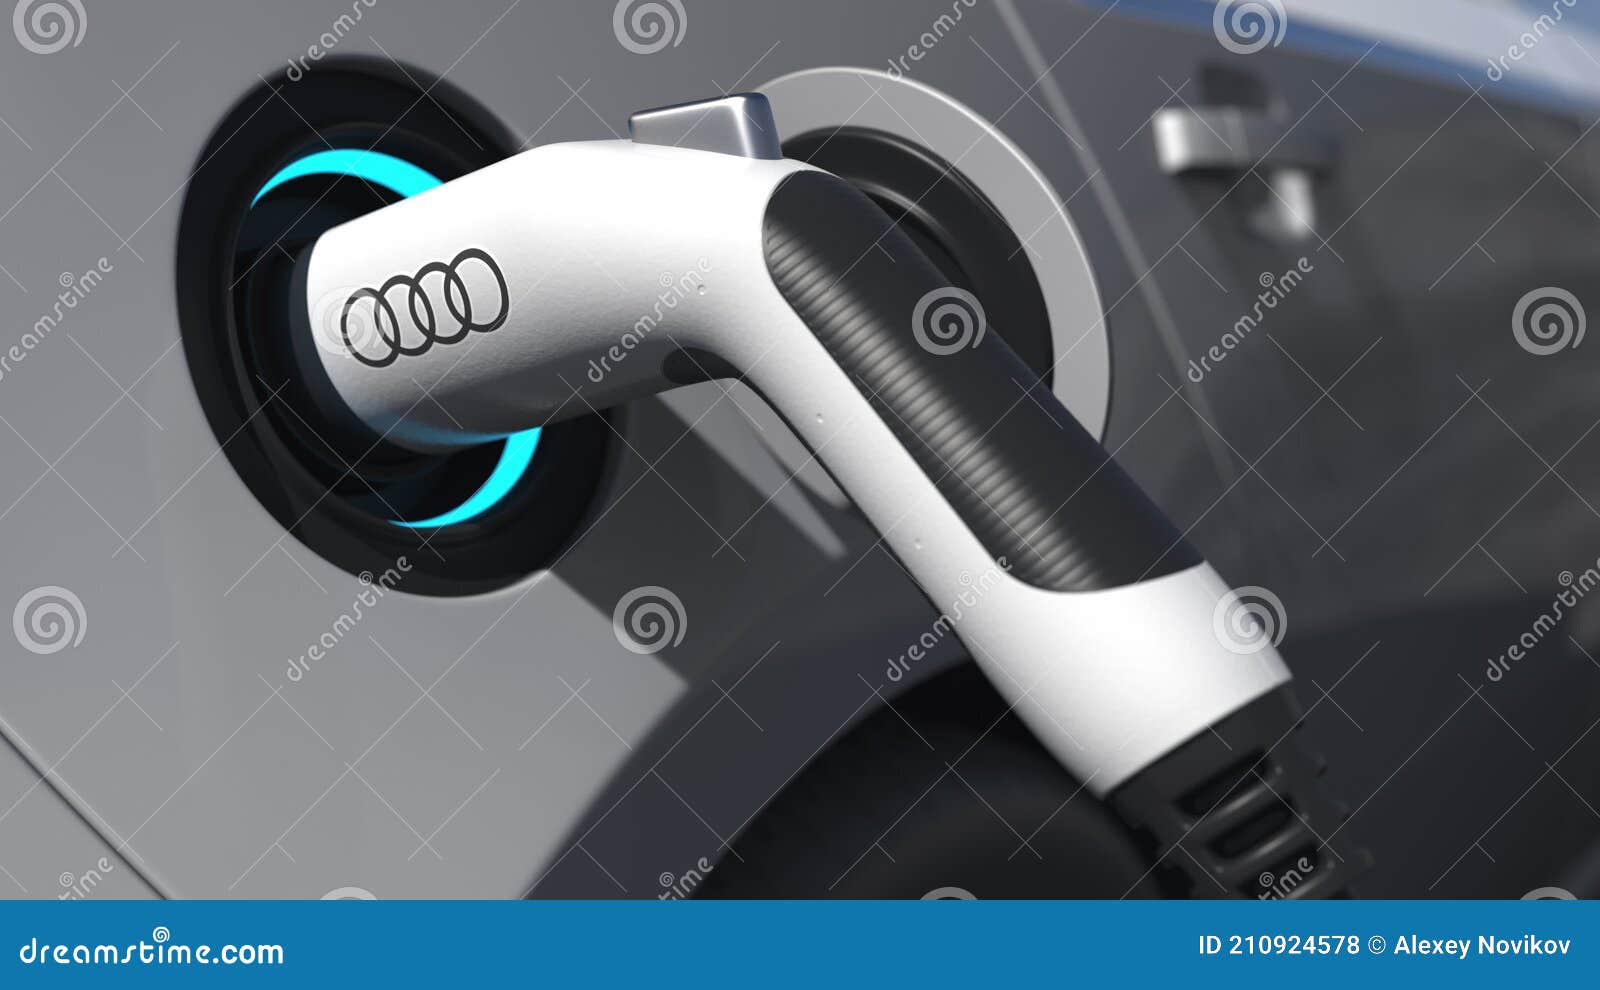 AUDI Logo on the Electric Car Plug. Editorial Conceptual 3d Animation Stock  Footage - Video of audi, future: 210924578